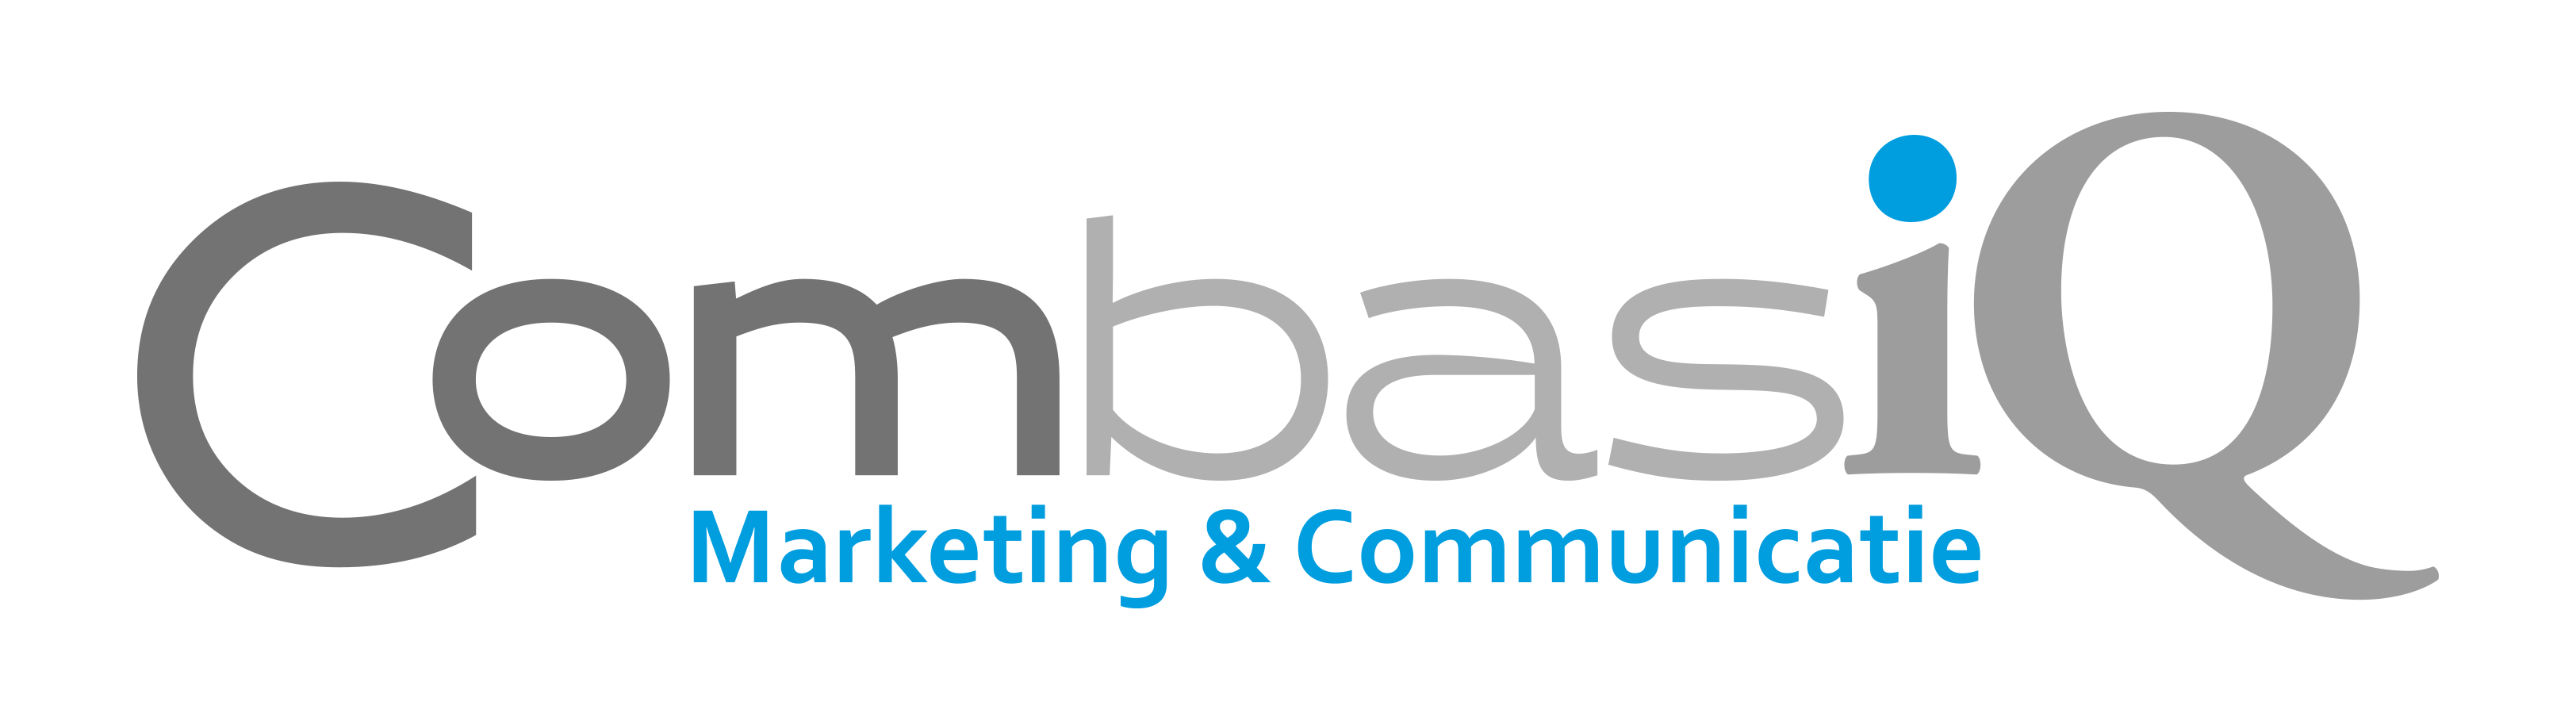 CombasiQ Marketing & Communicatie